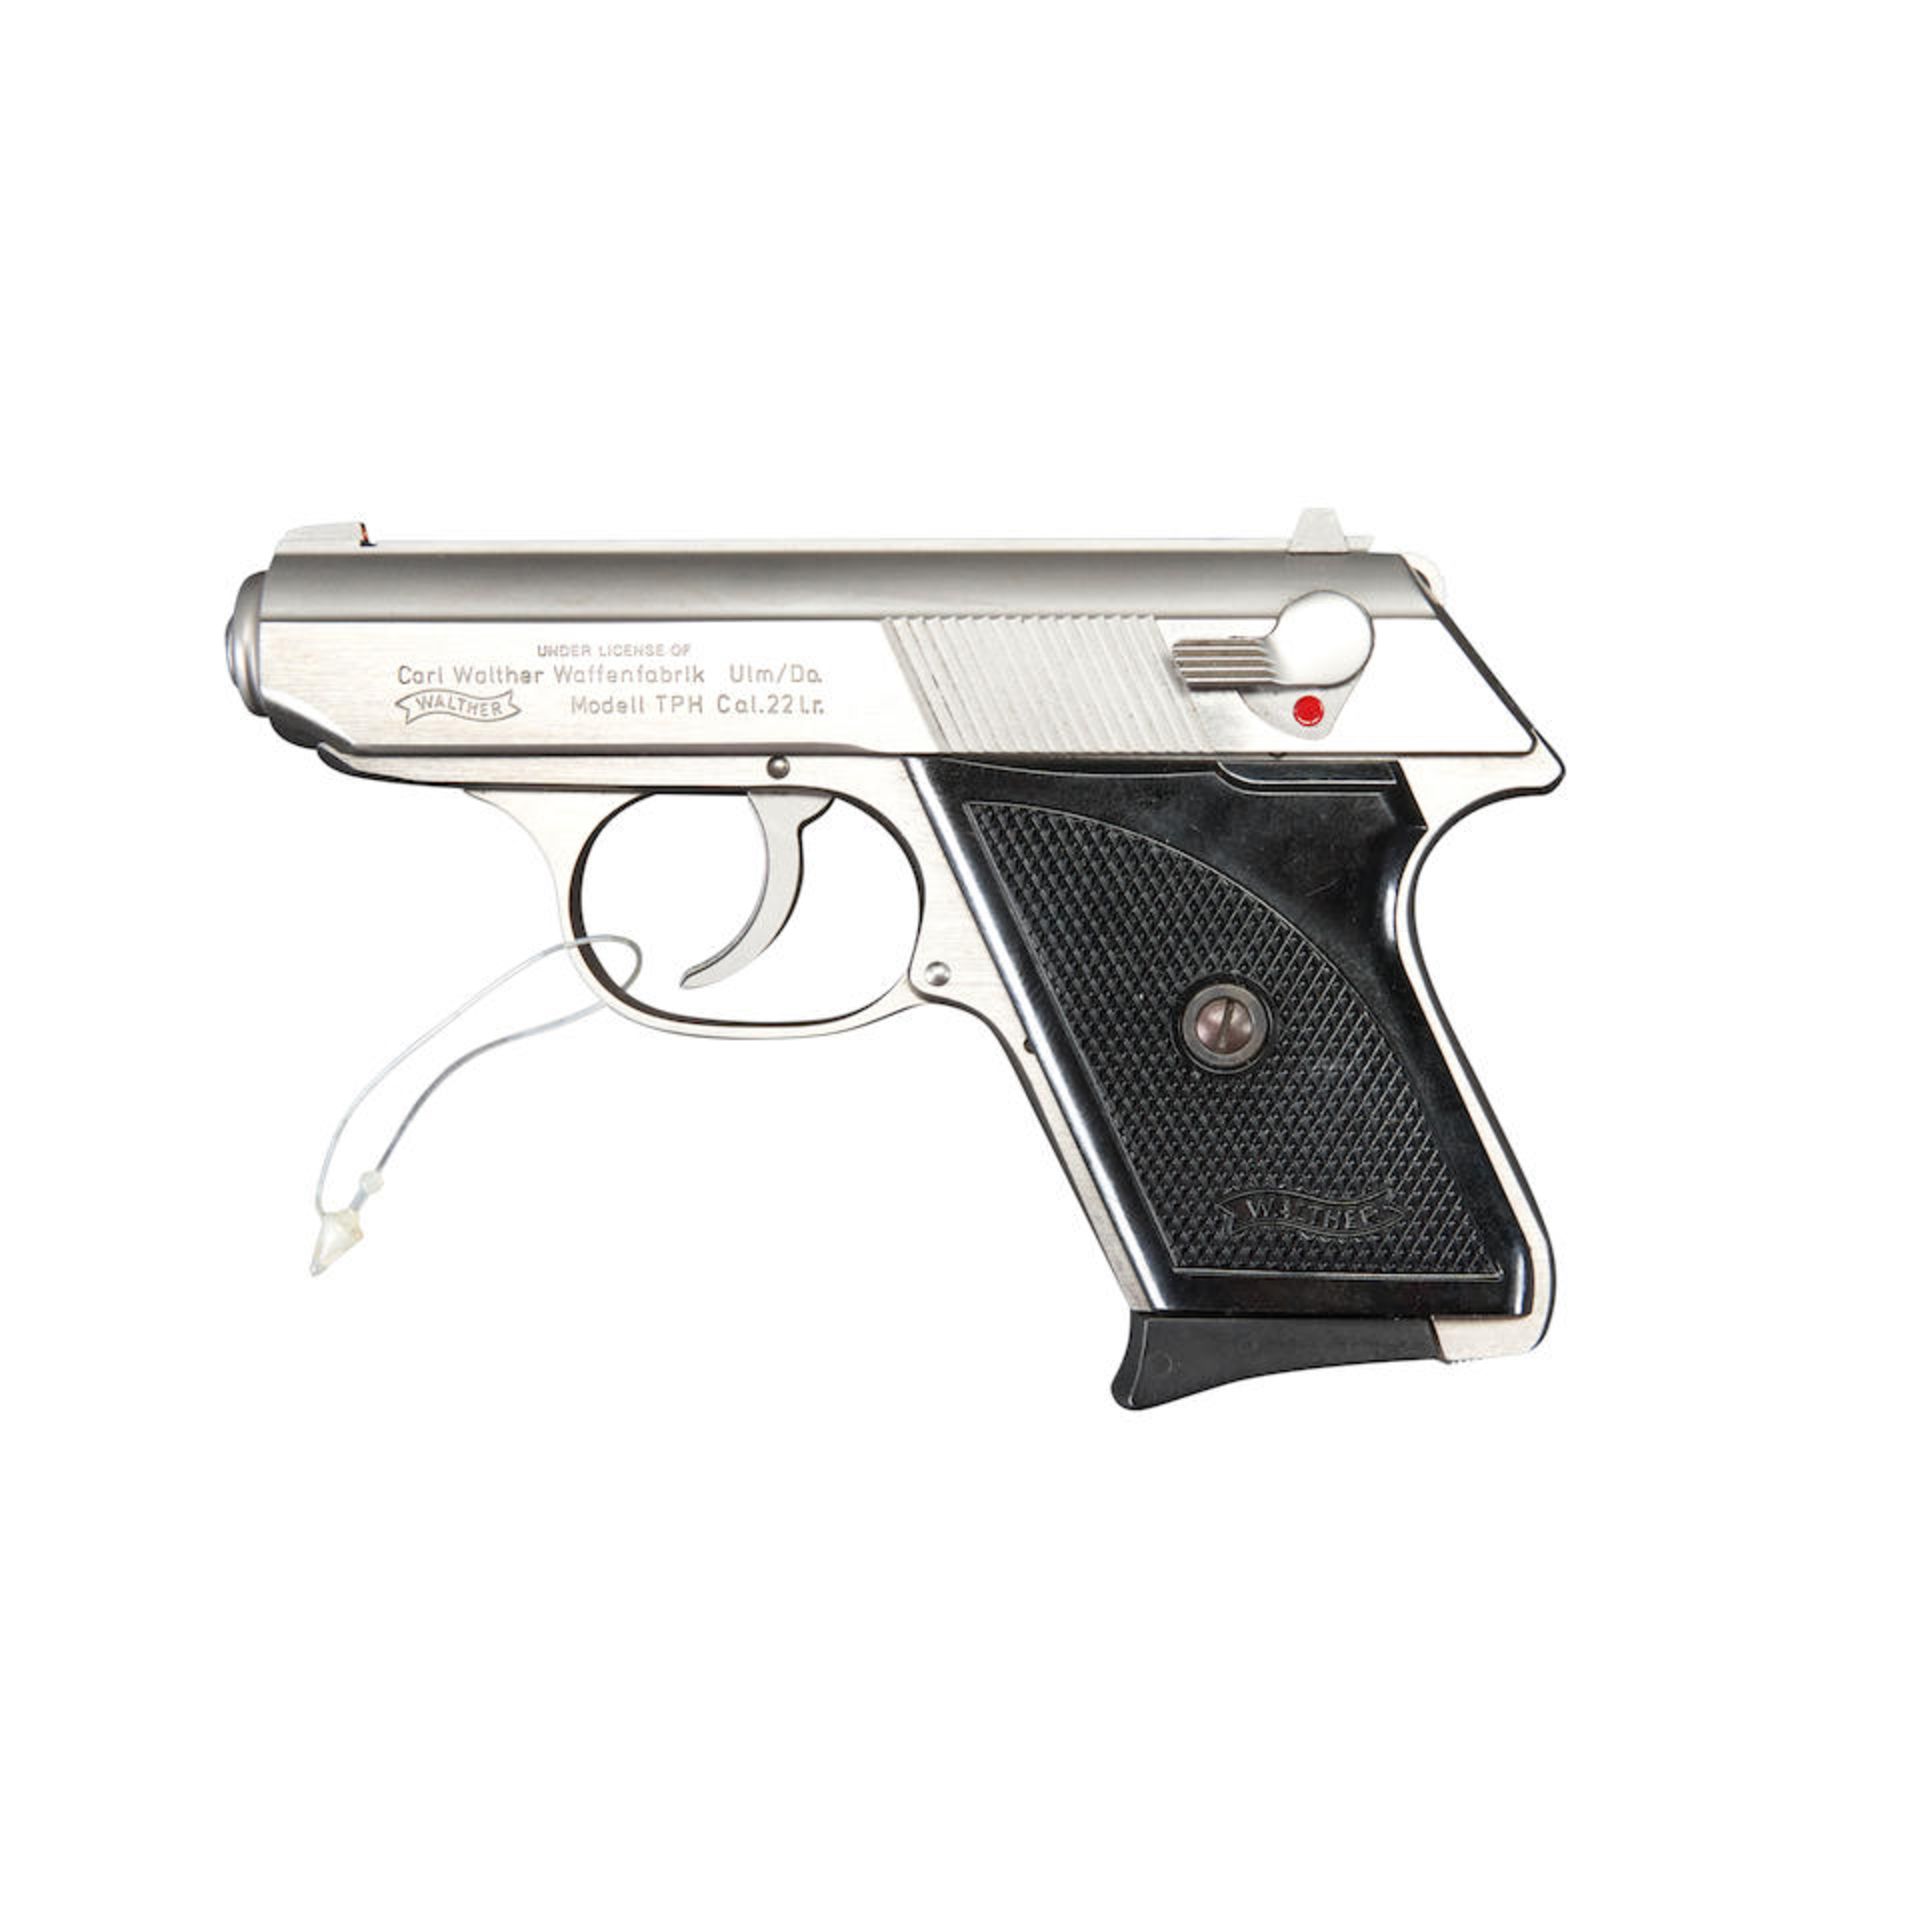 Walther/Interarms Model THP Semi-Automatic Pistol, Modern handgun - Image 2 of 3